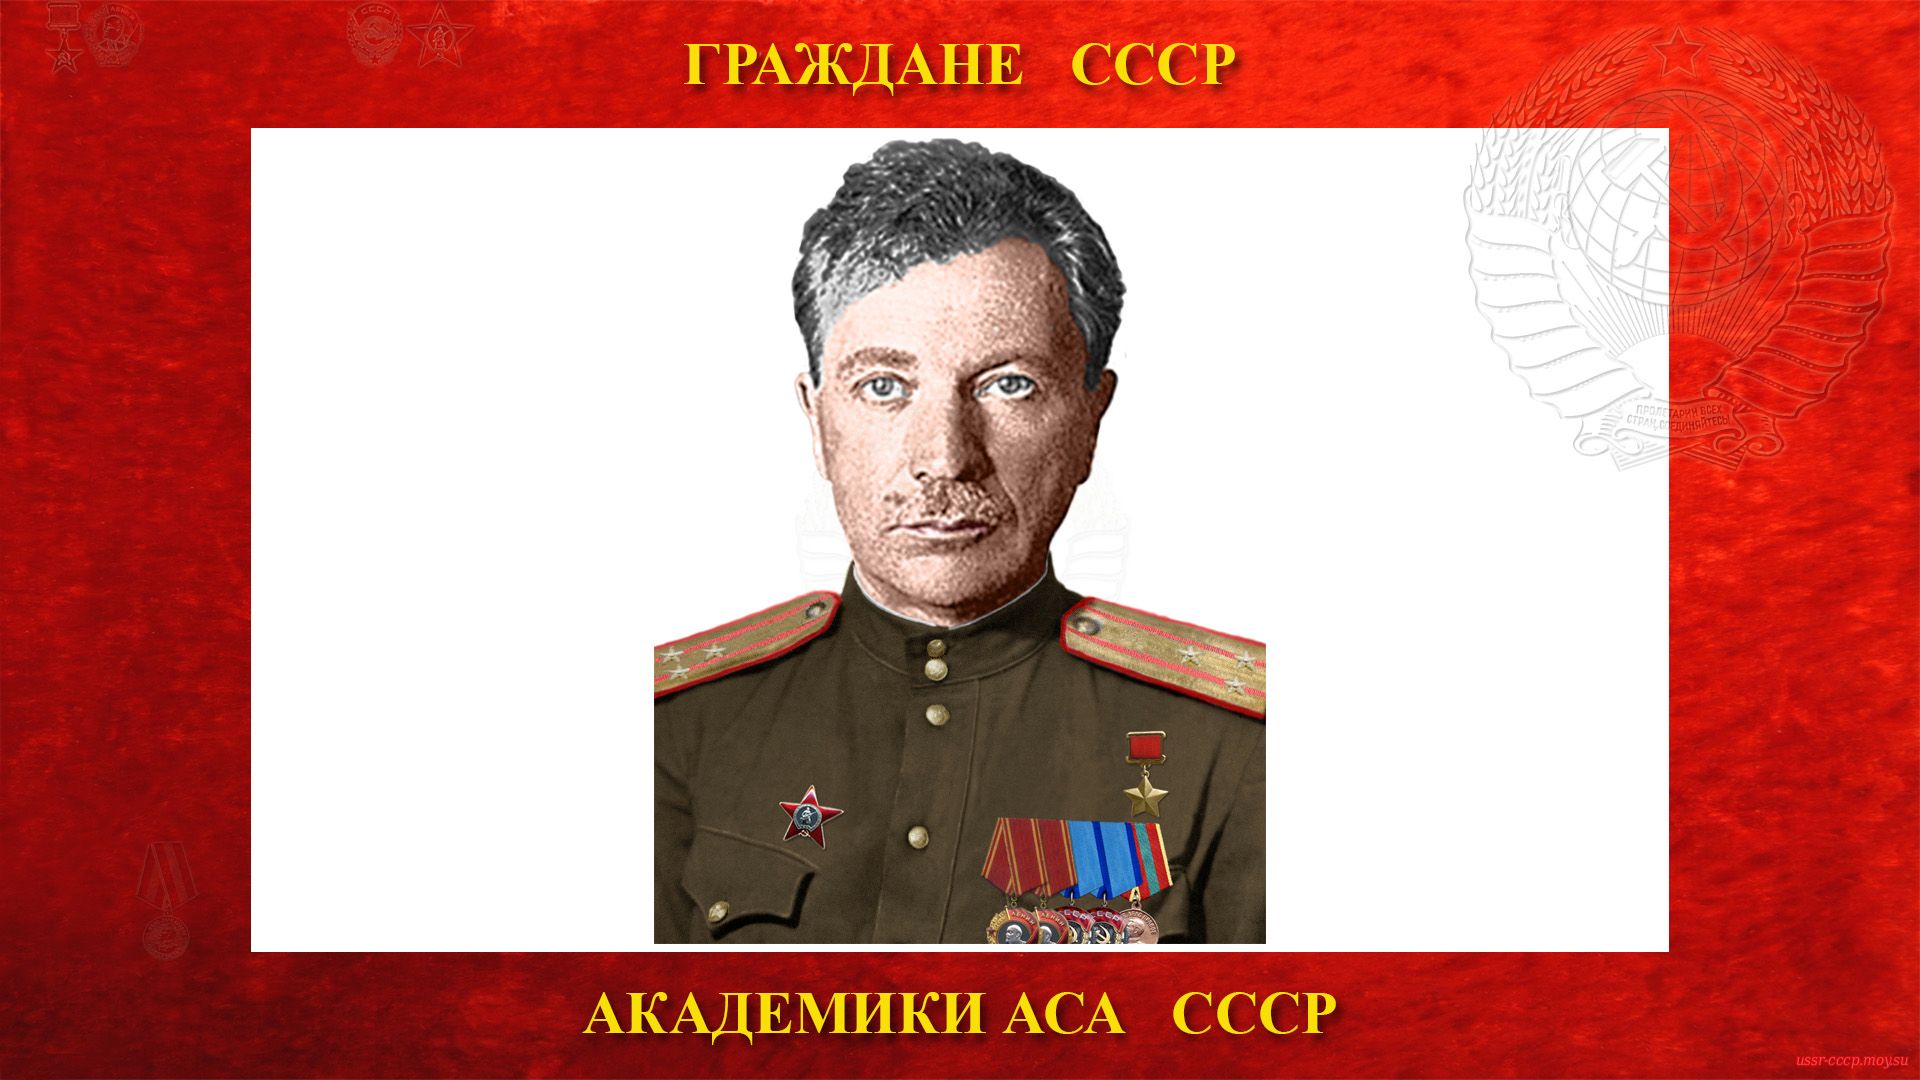 Сапрыкин Василий Андреевич (биография)